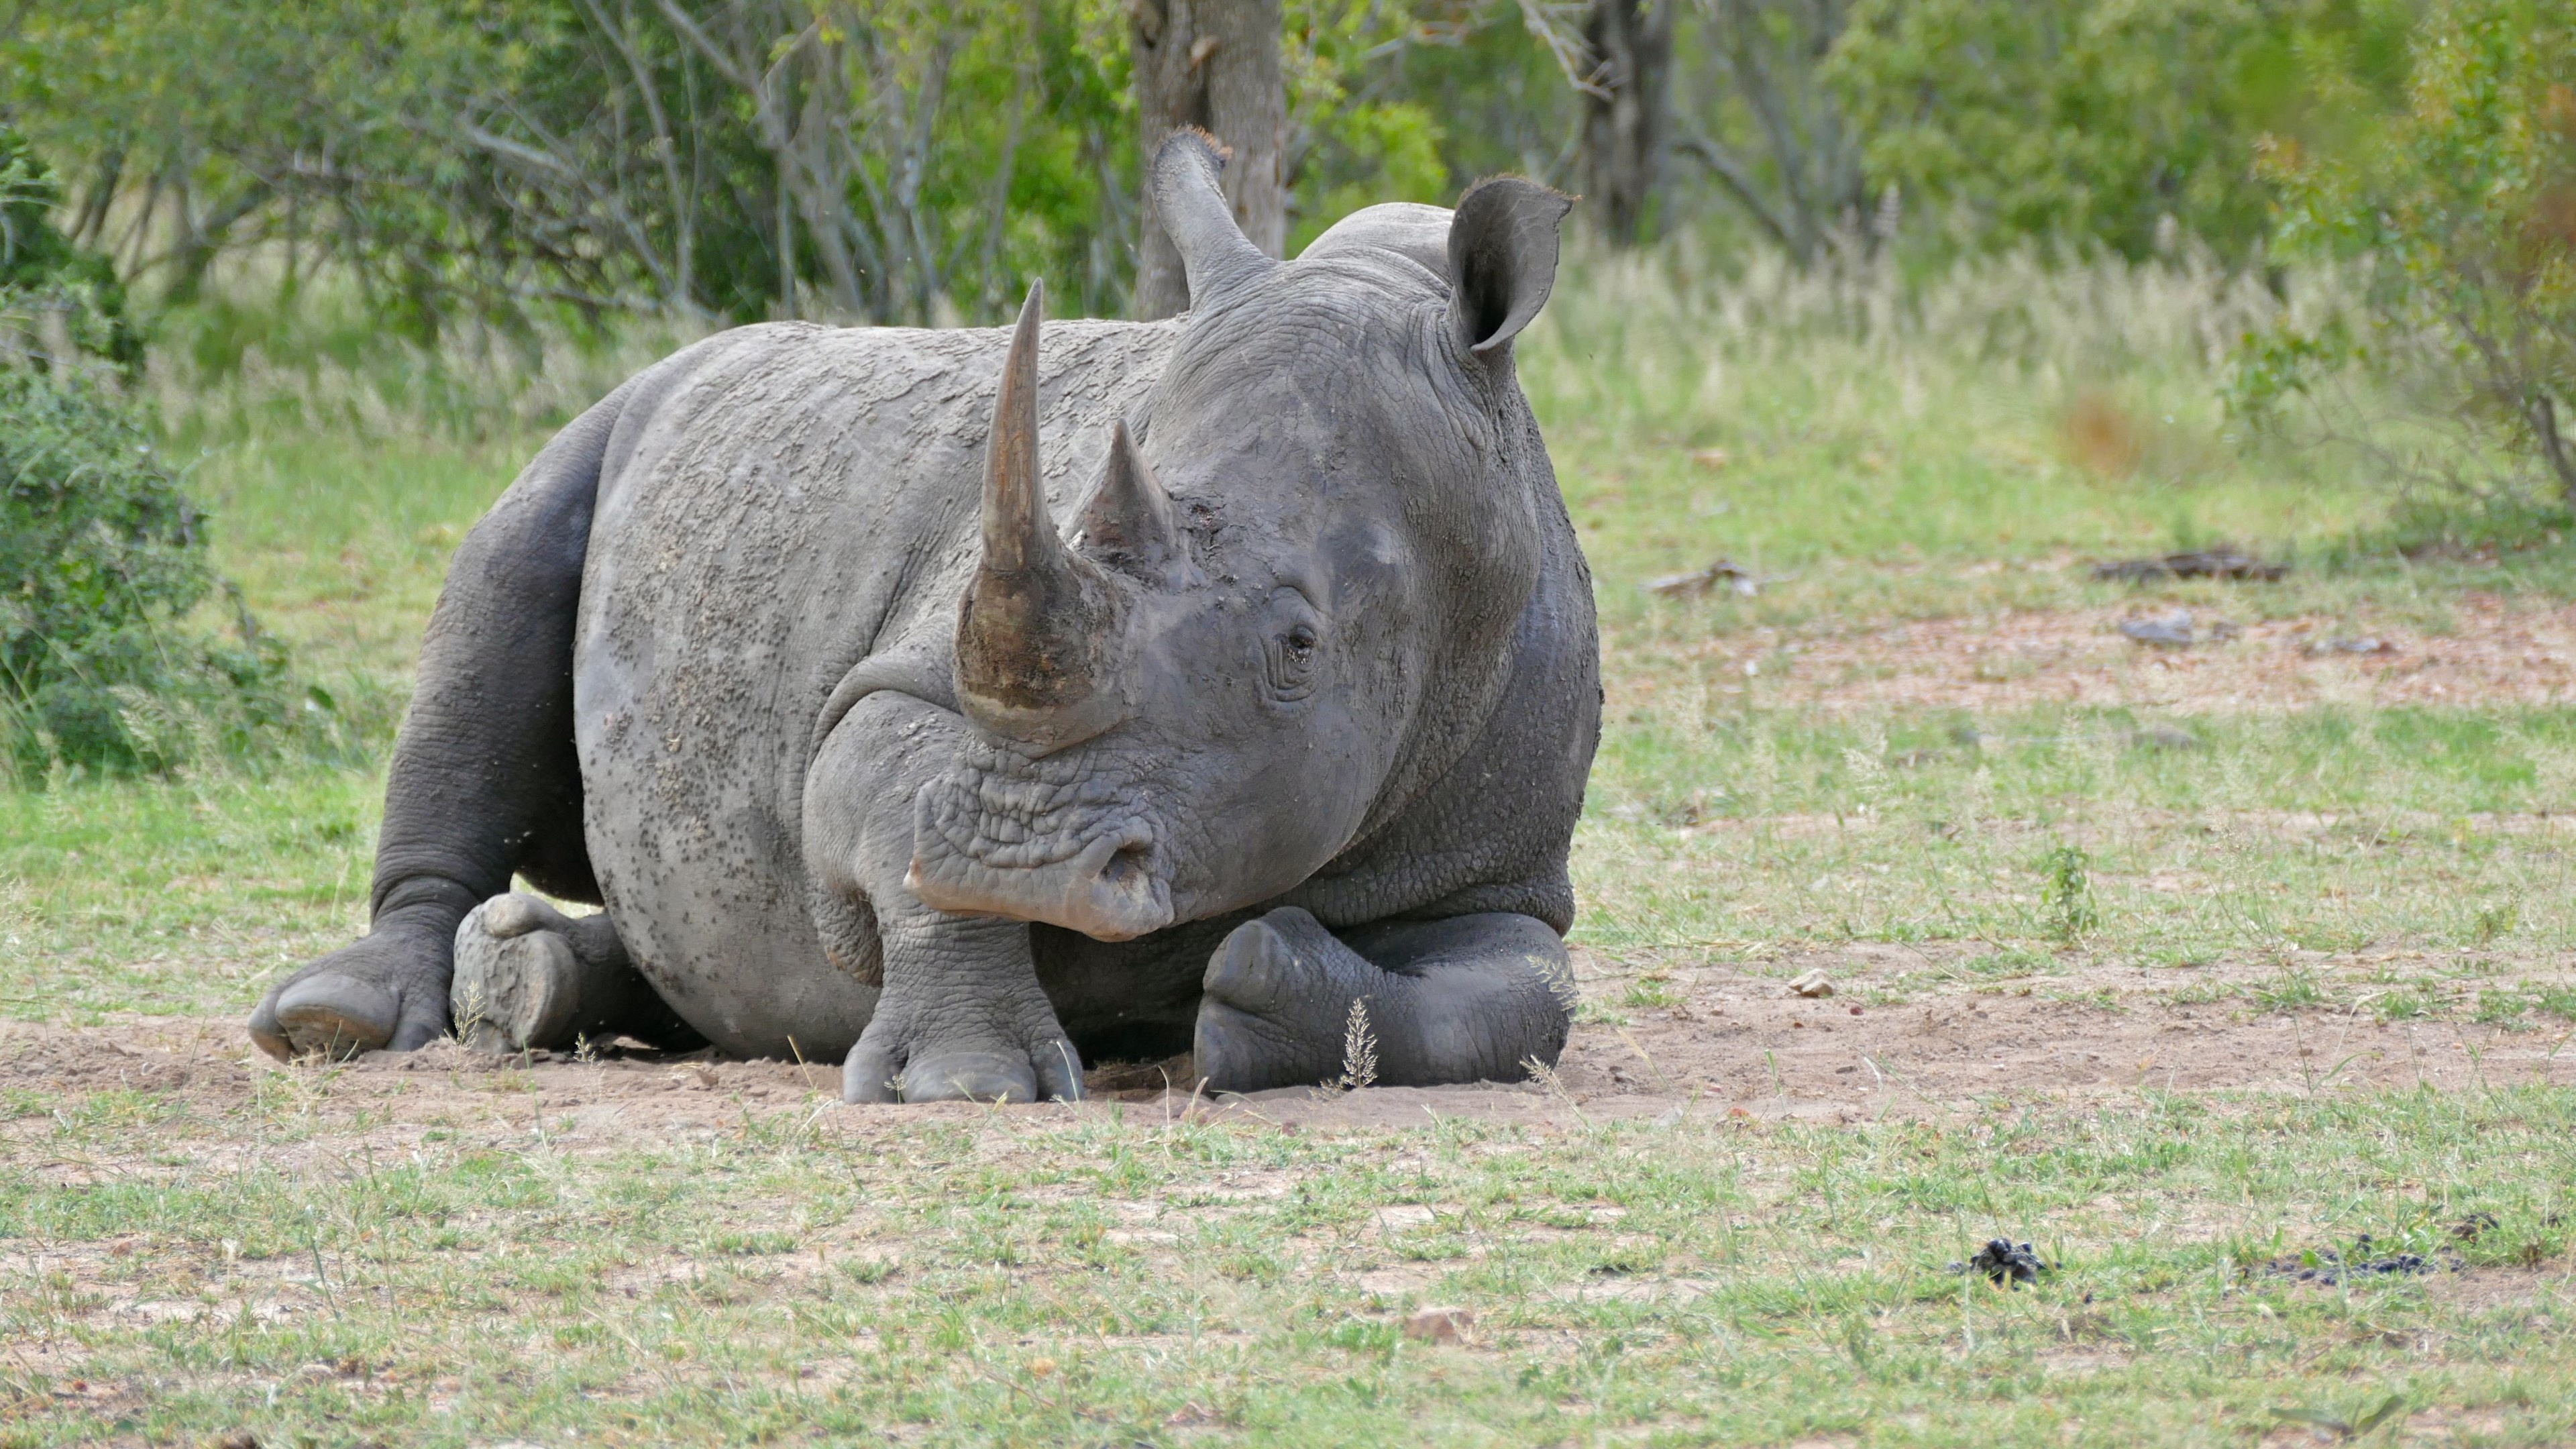 Multiple rhino wallpapers, Diverse rhino images, Rhino picture compilation, Rhino photo selection, 3840x2160 4K Desktop